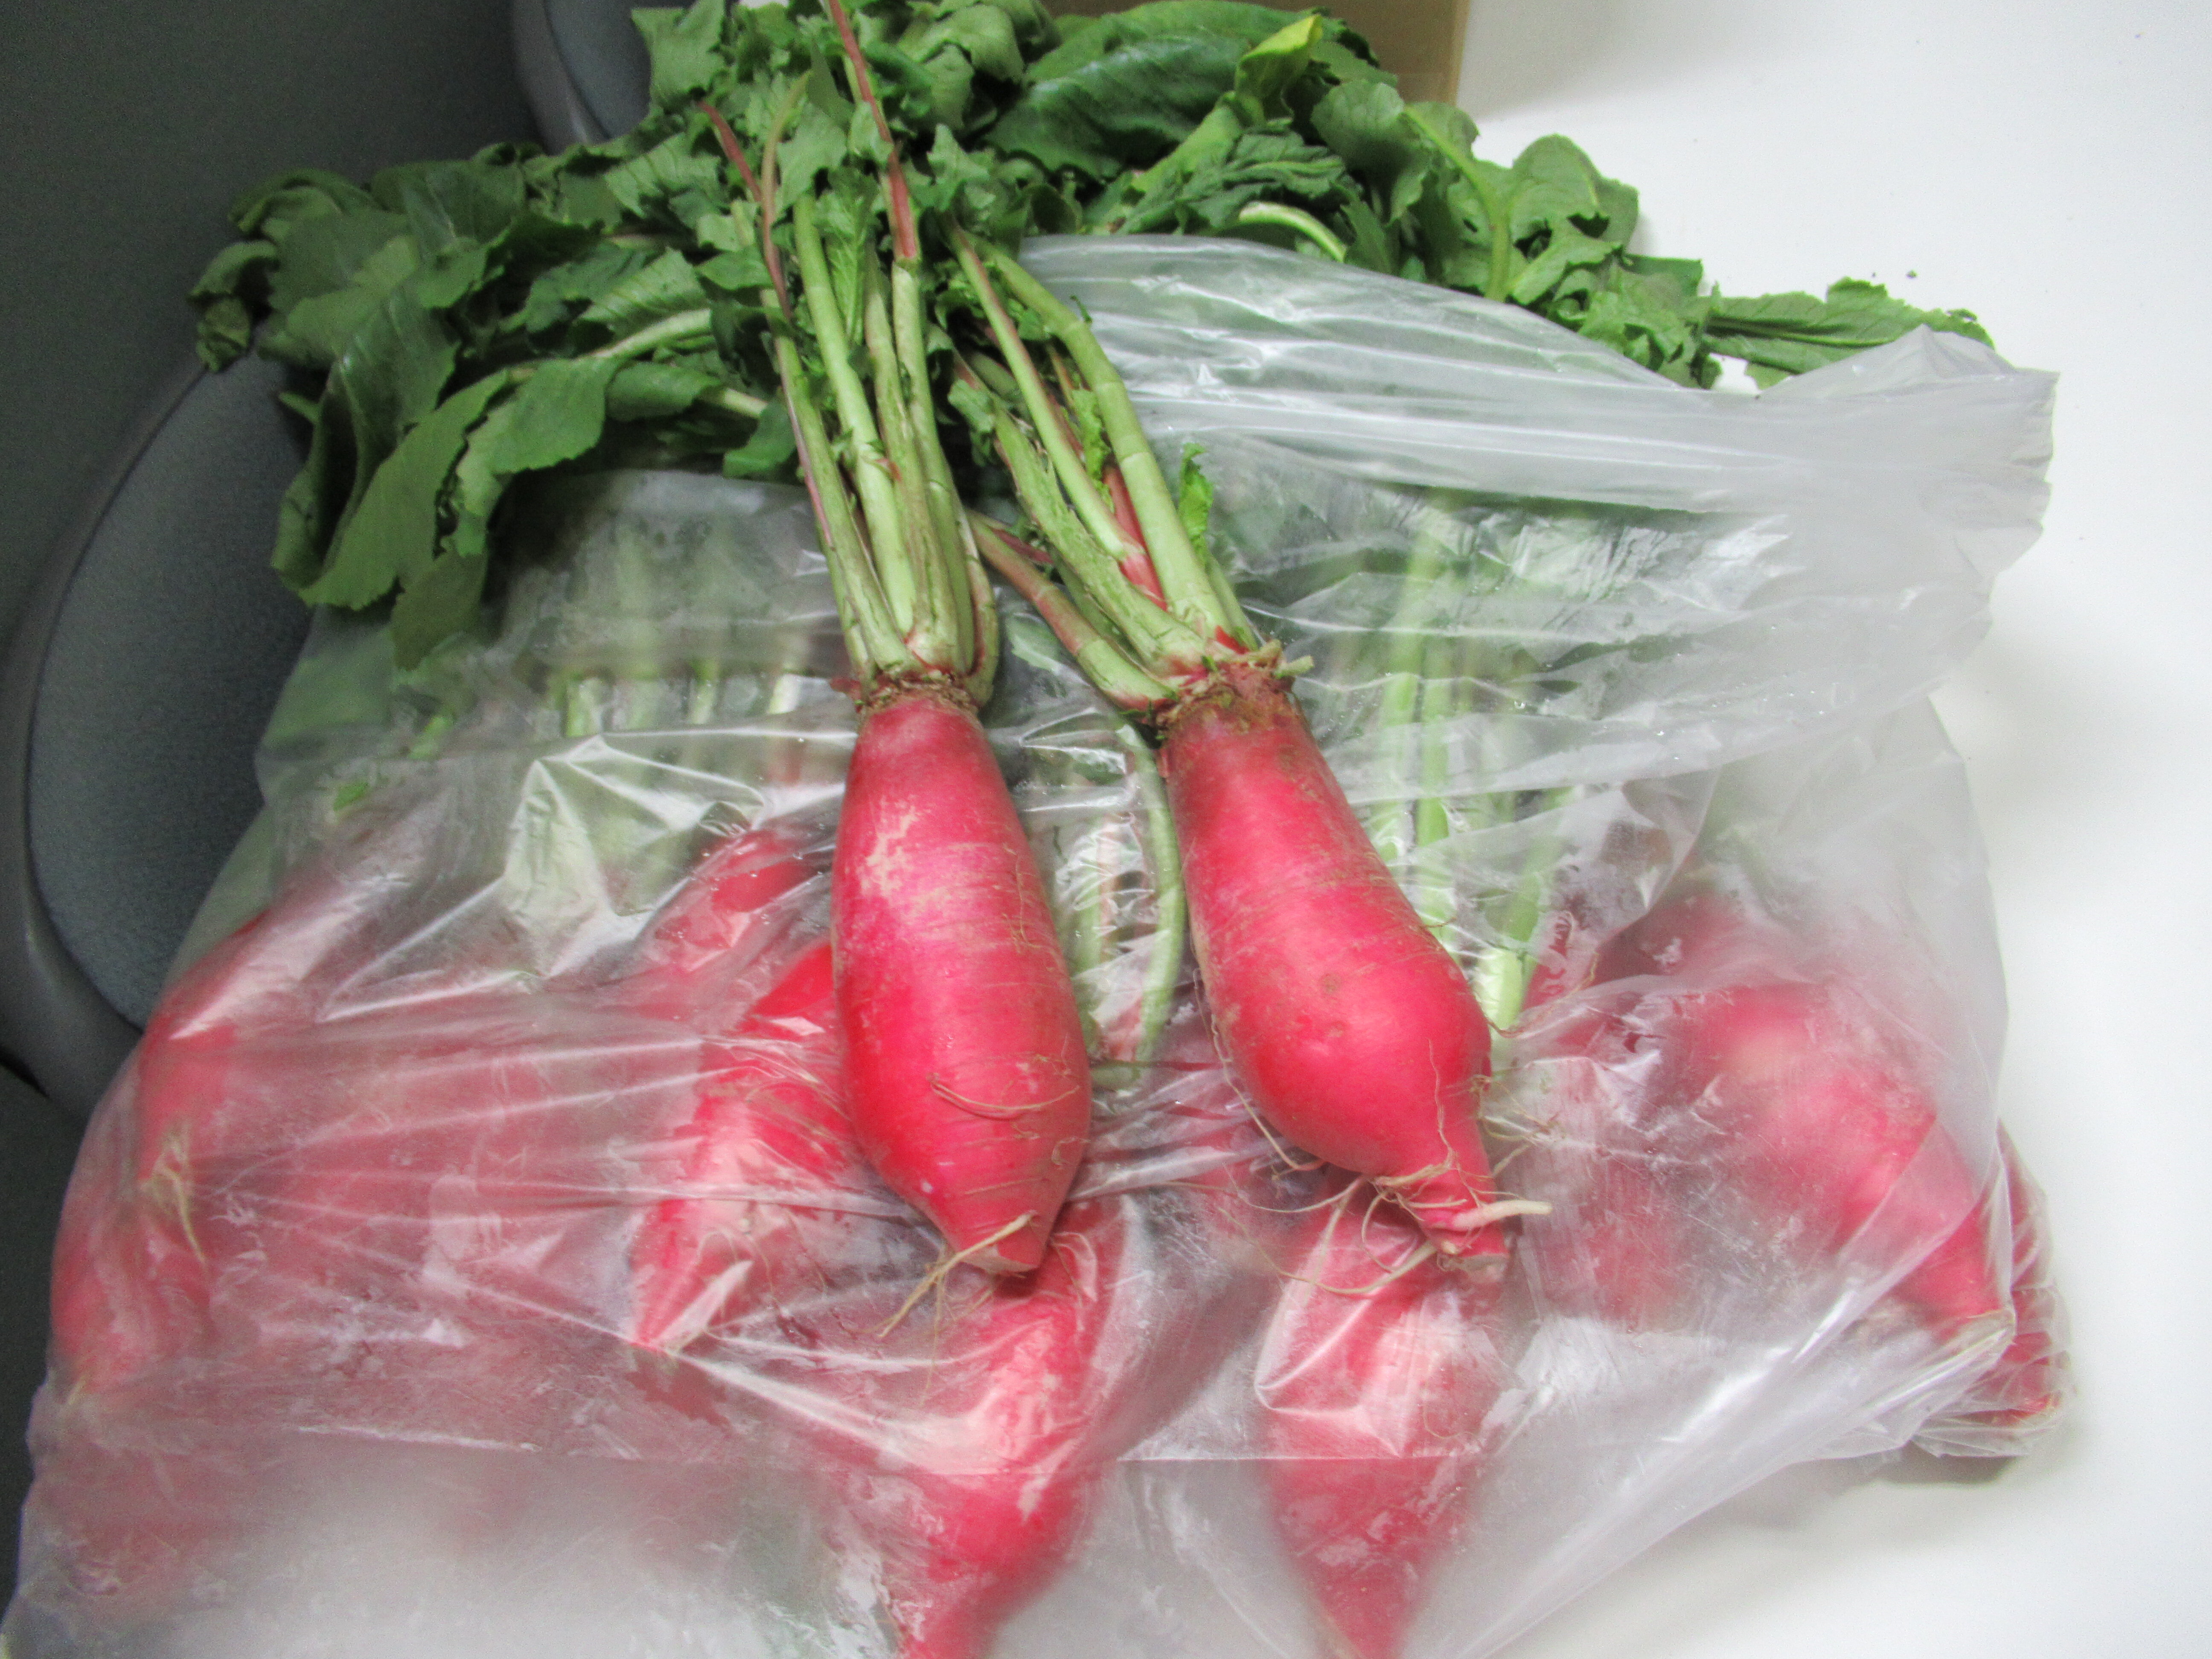 MS. Takahashi donated vegetables(radish) to the international students